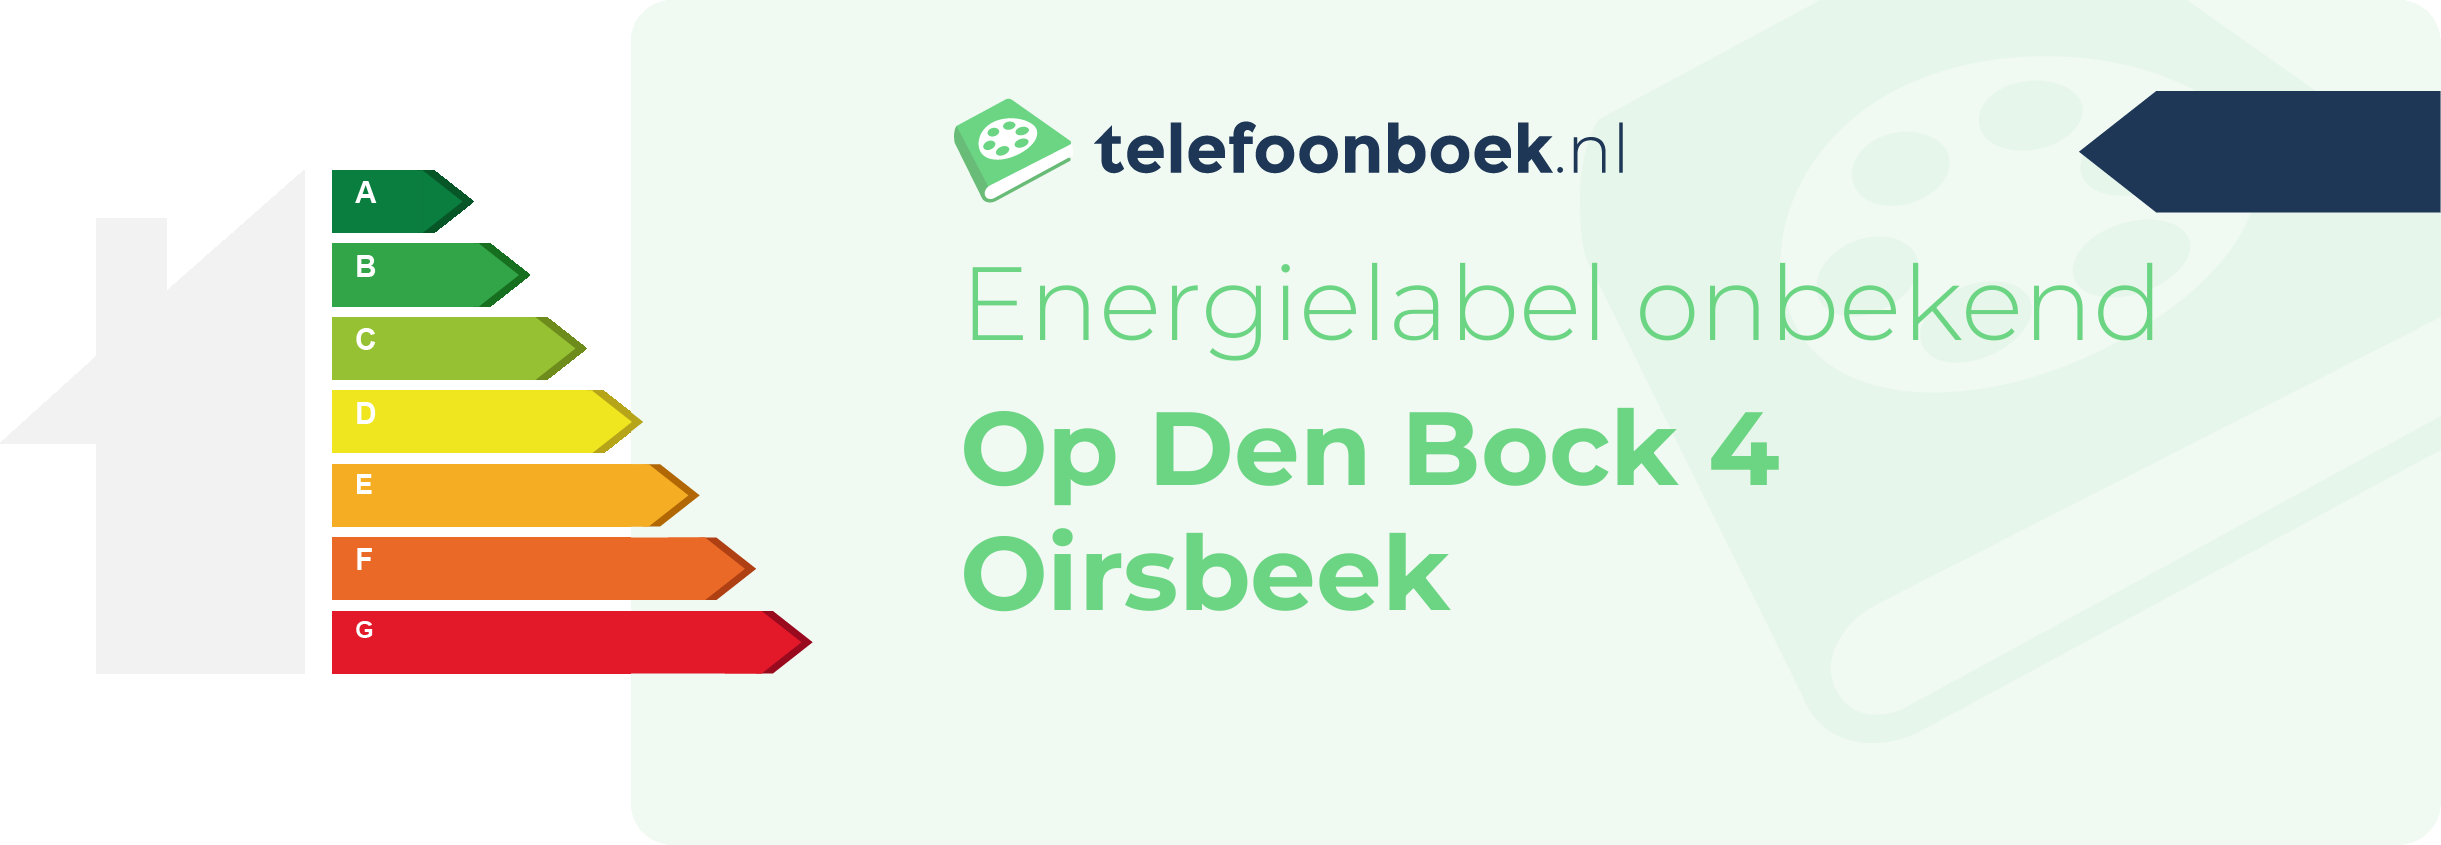 Energielabel Op Den Bock 4 Oirsbeek